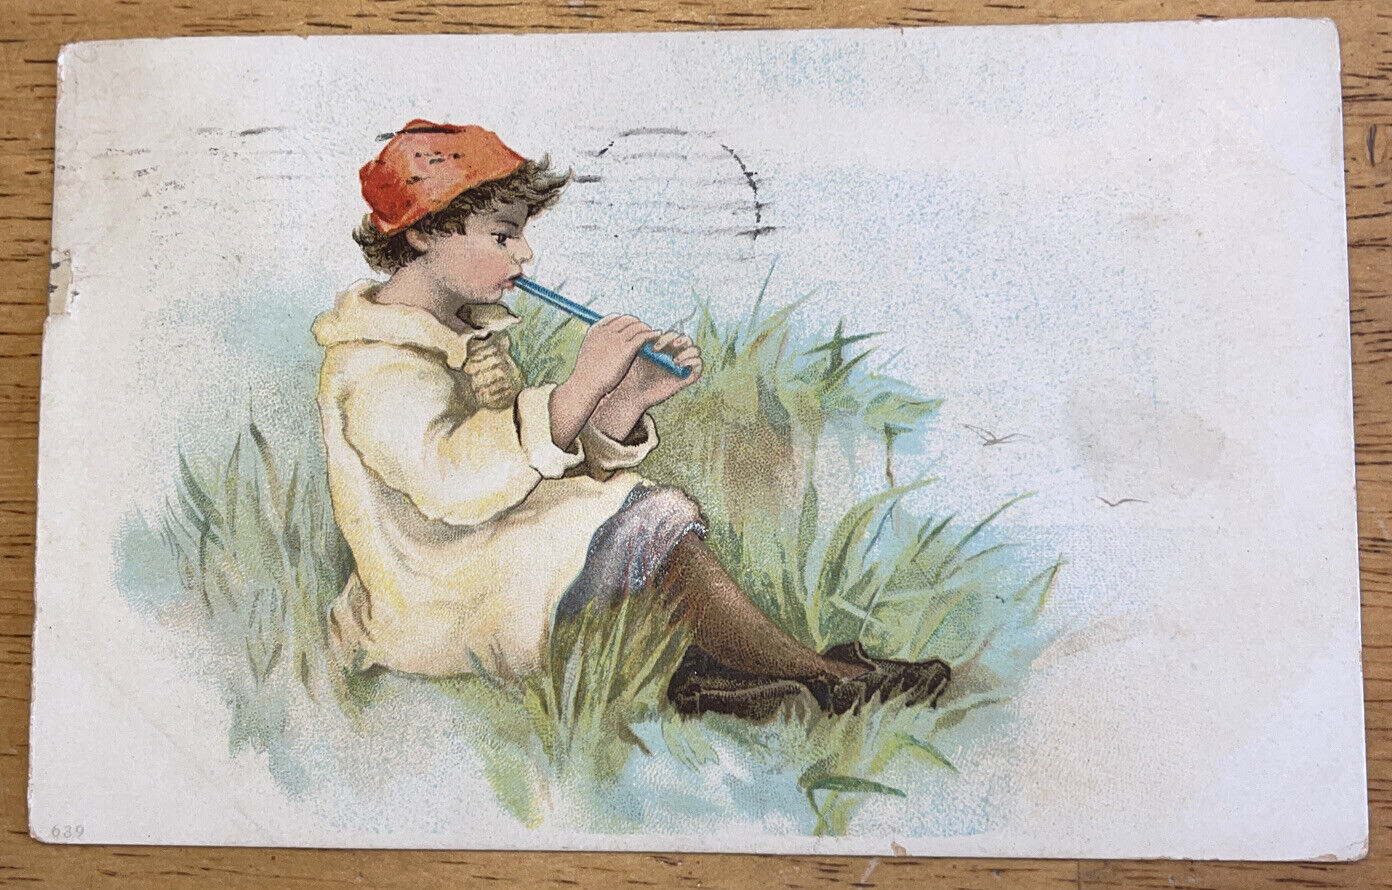 Antique 1908 Boy Playing a Flute Art Postcard New Orleans Franklin 1 Cent Stamp